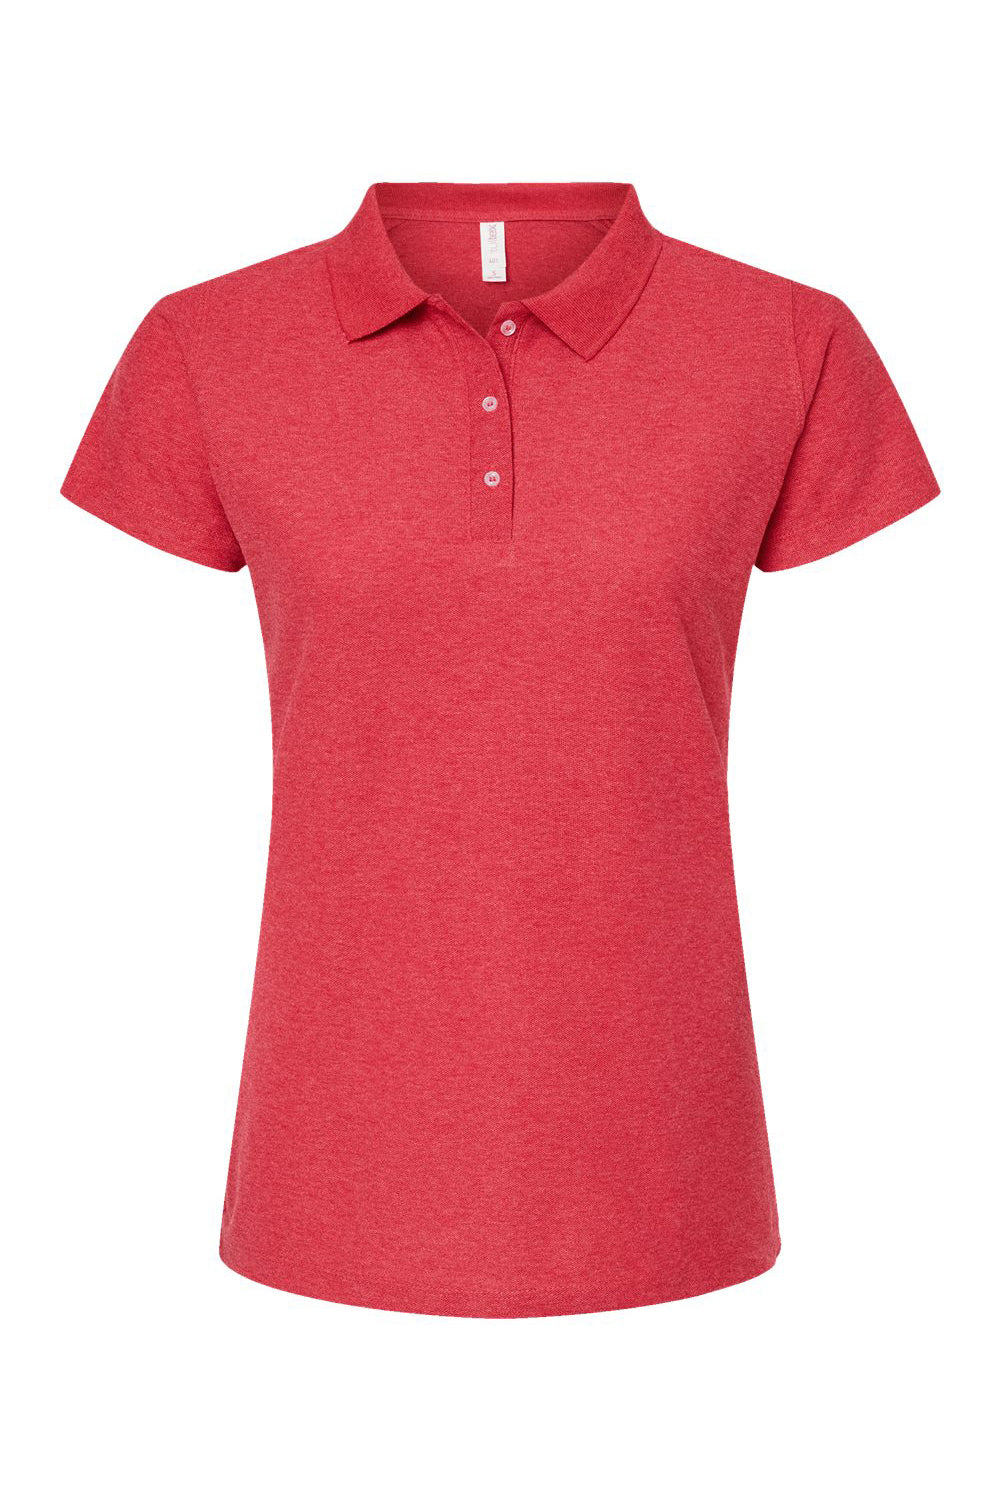 Tultex 401 Womens Sport Shirt Sleeve Polo Shirt Heather Red Flat Front